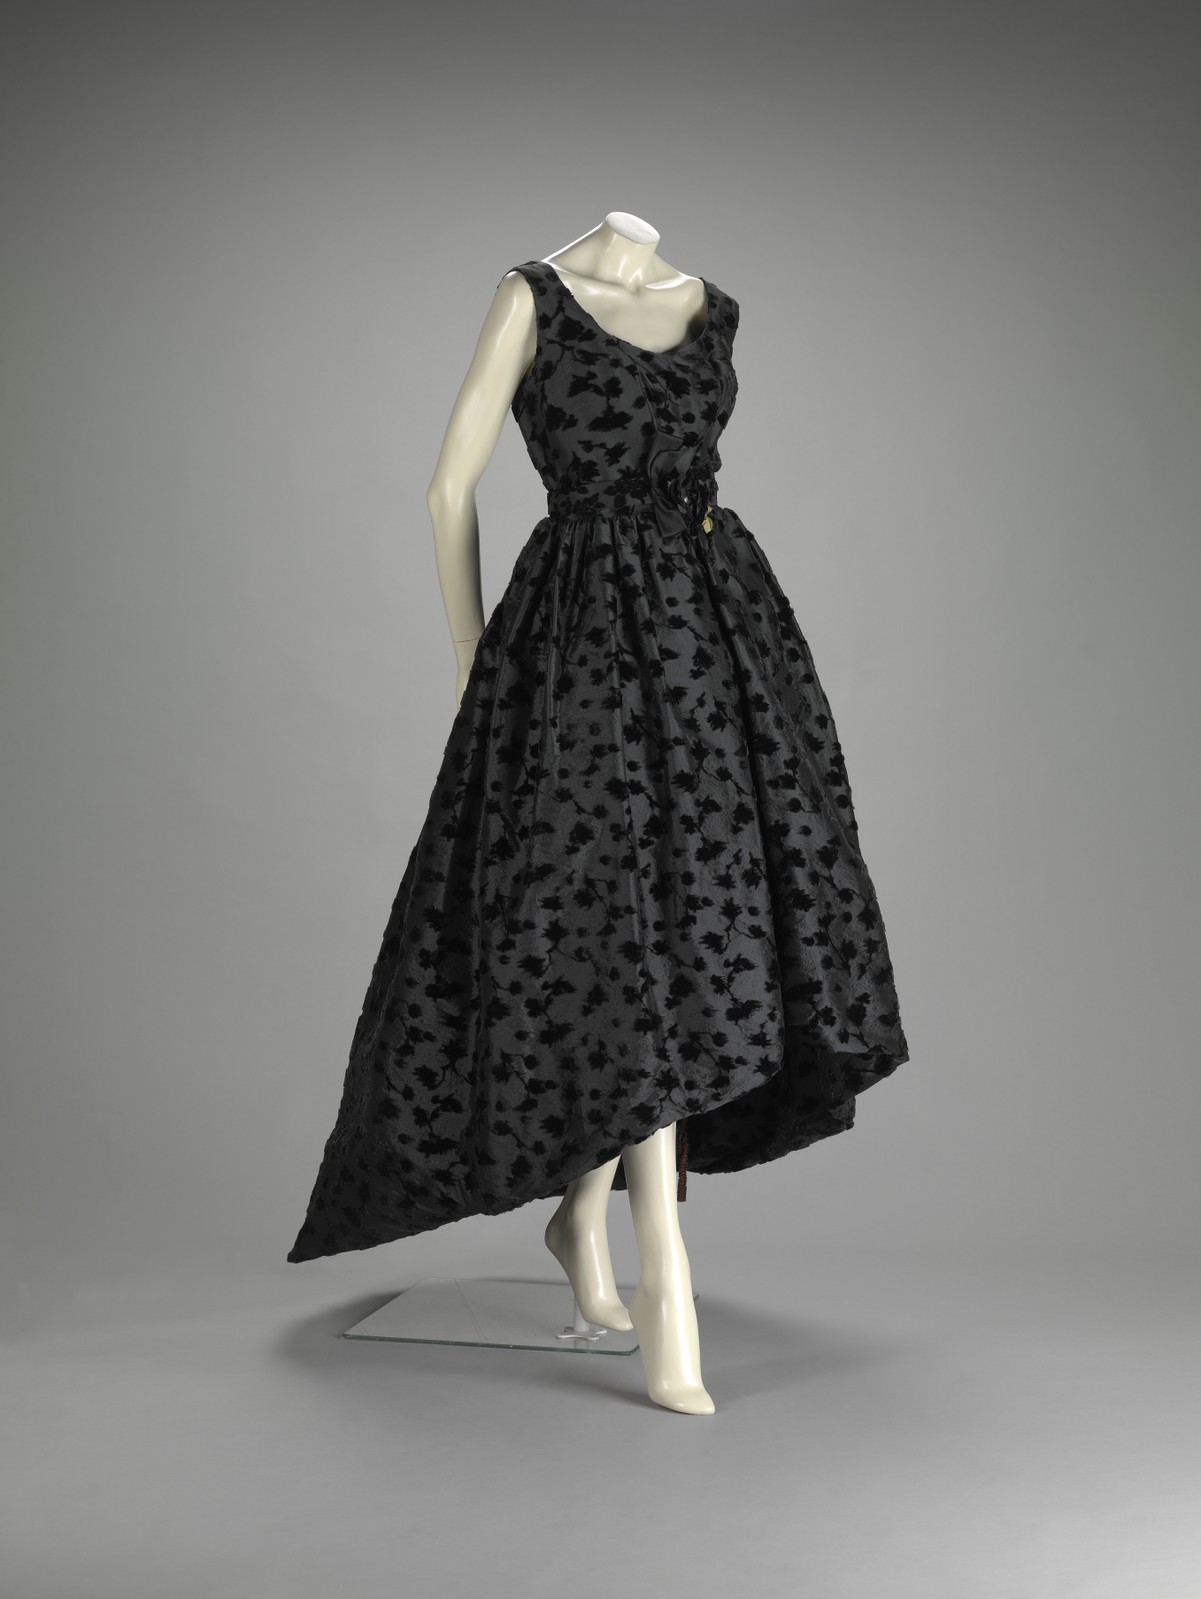 Dress, Cristobal Balenciaga, 1958, The Indianapolis Museum of Art